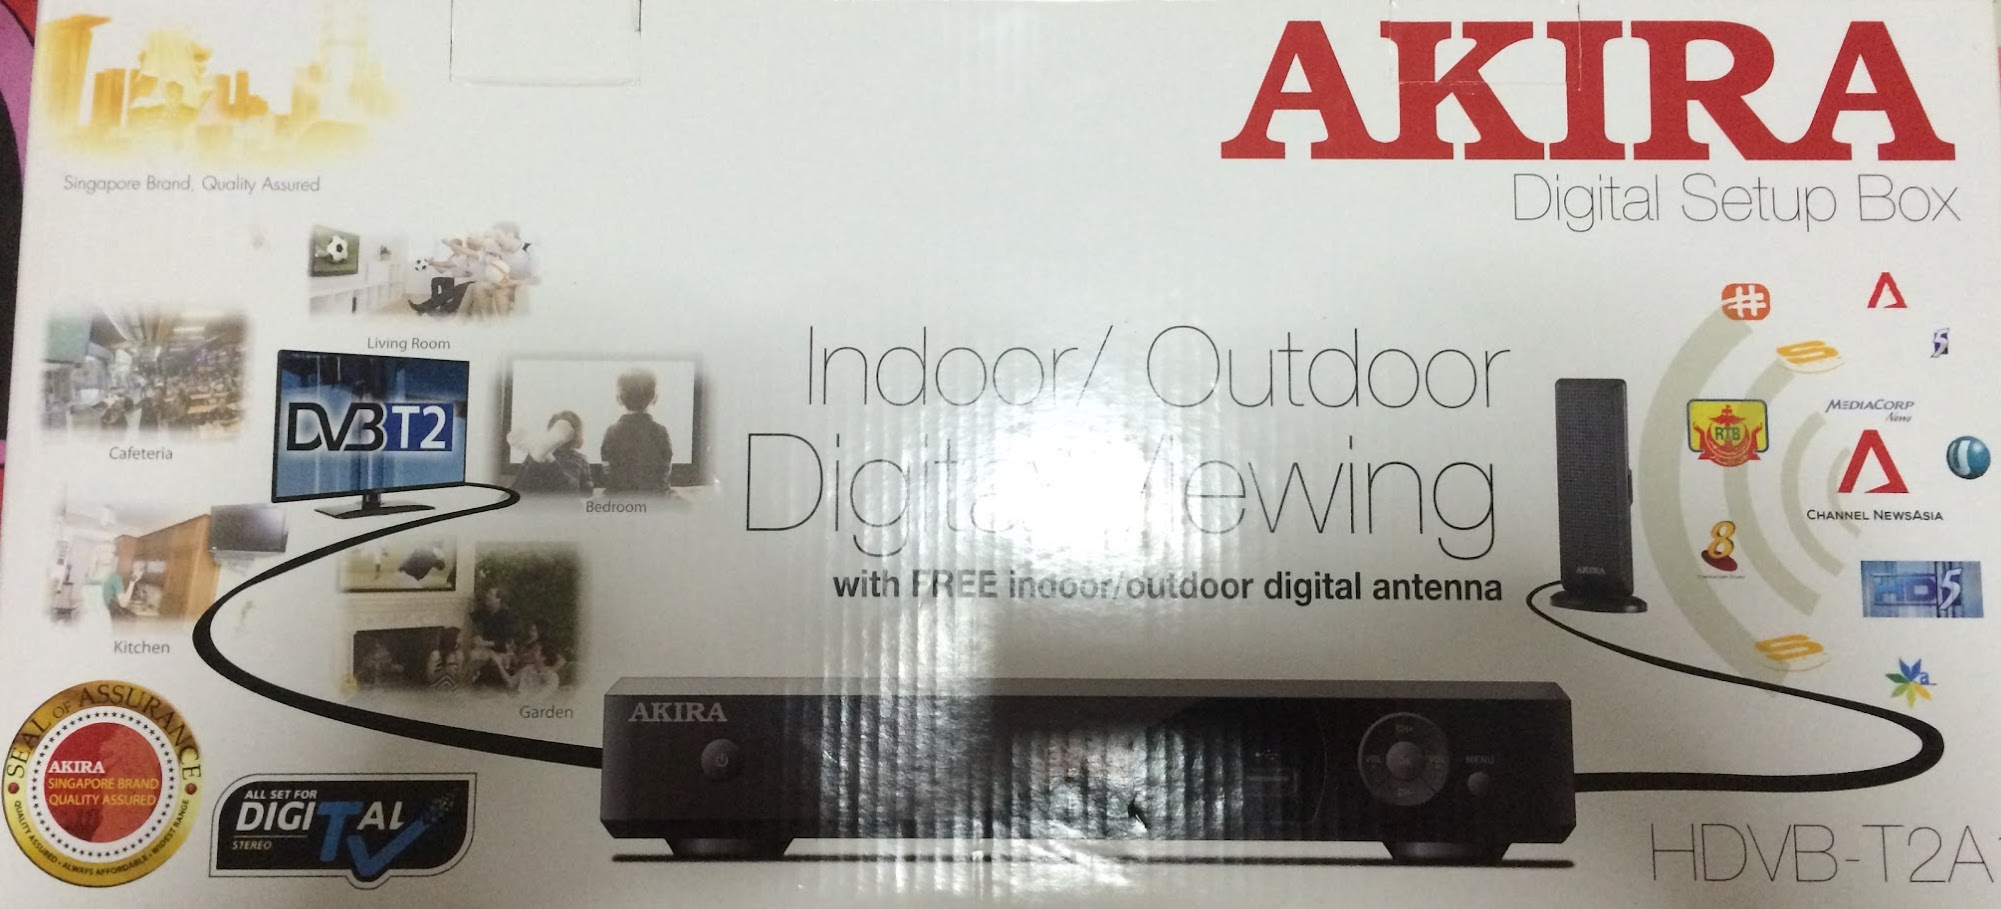 Akira Indoor/Outdoor Digital Viewing with Antenna